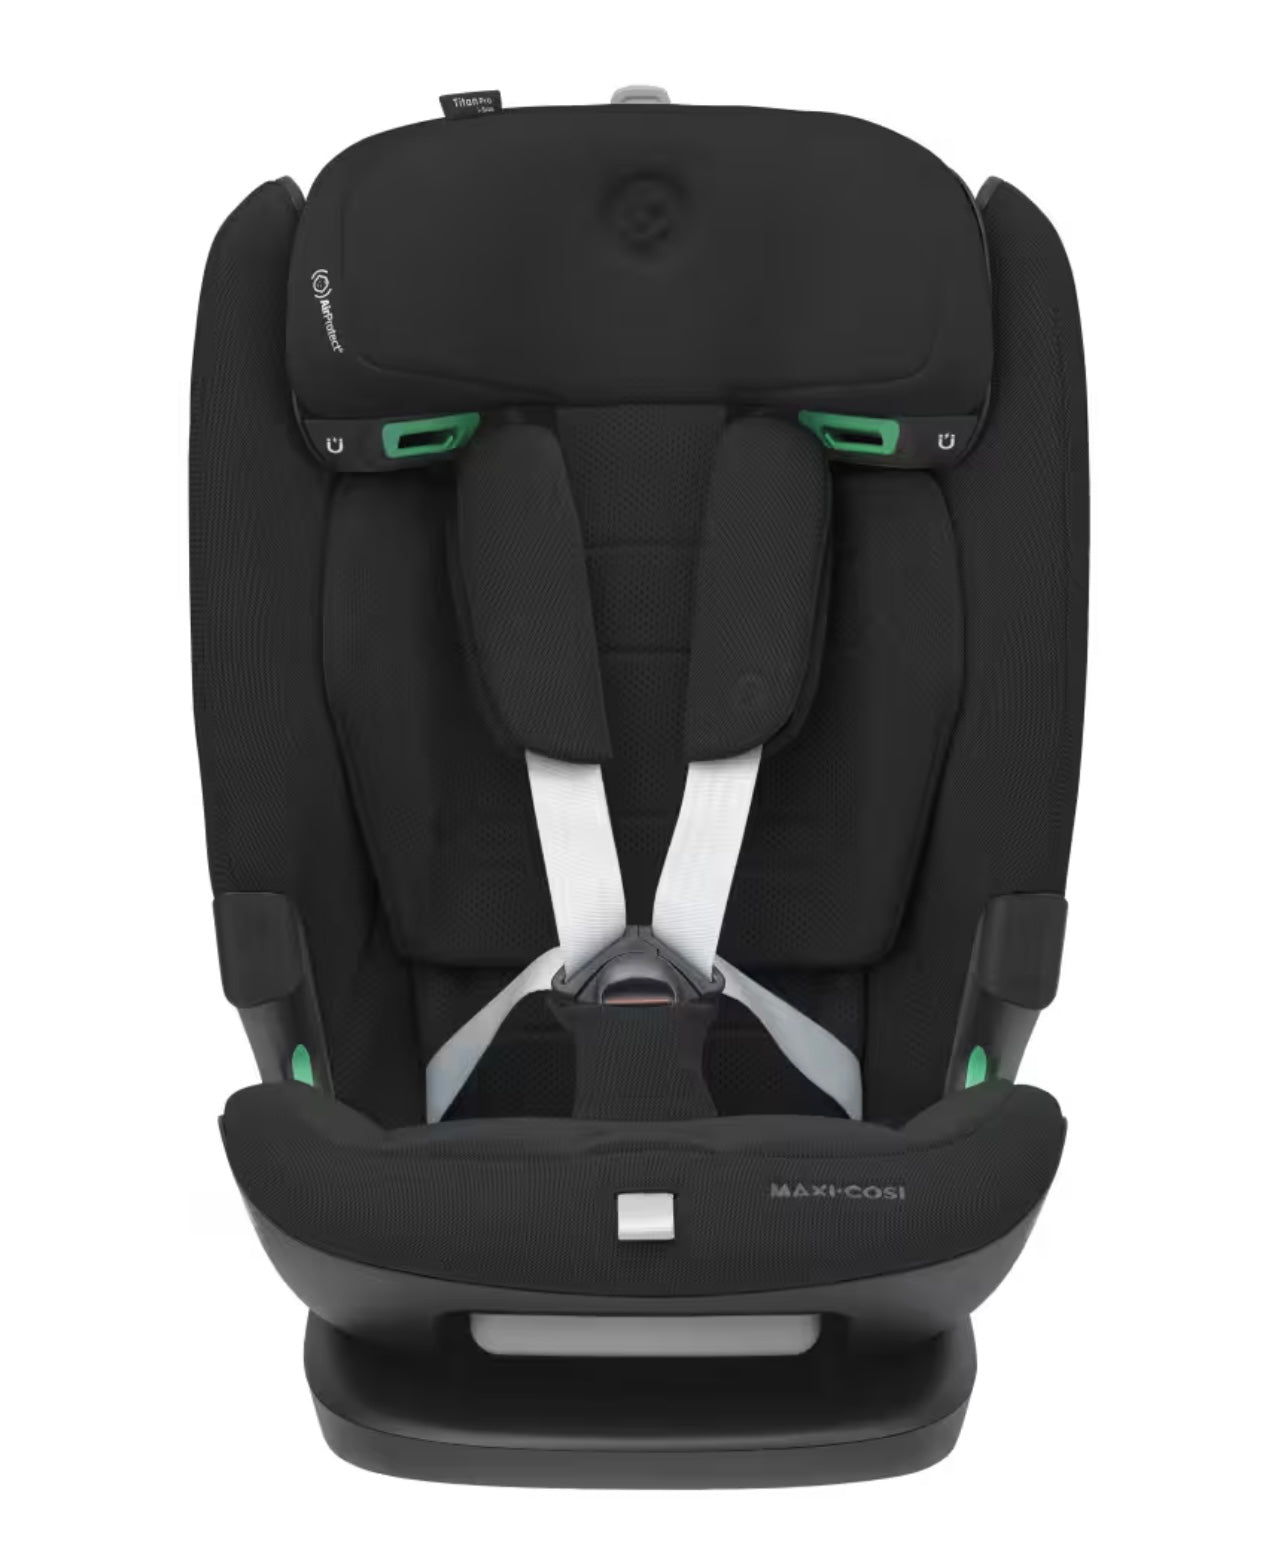 Titan Pro2 i-Sized Toddler/Child Car Seat